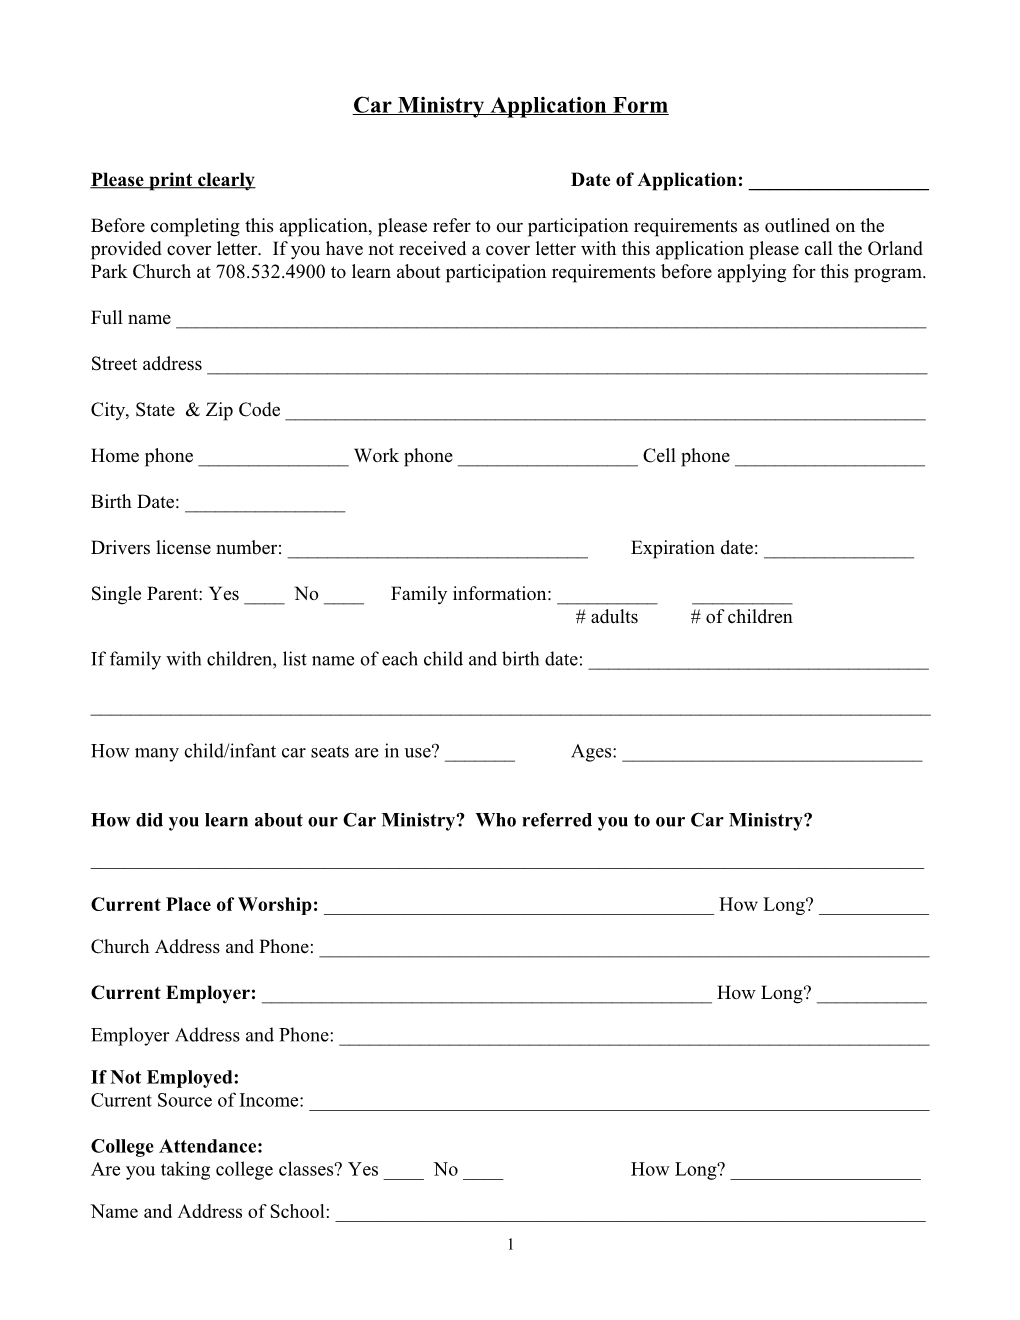 Orland Park Church Car Ministry Application Form